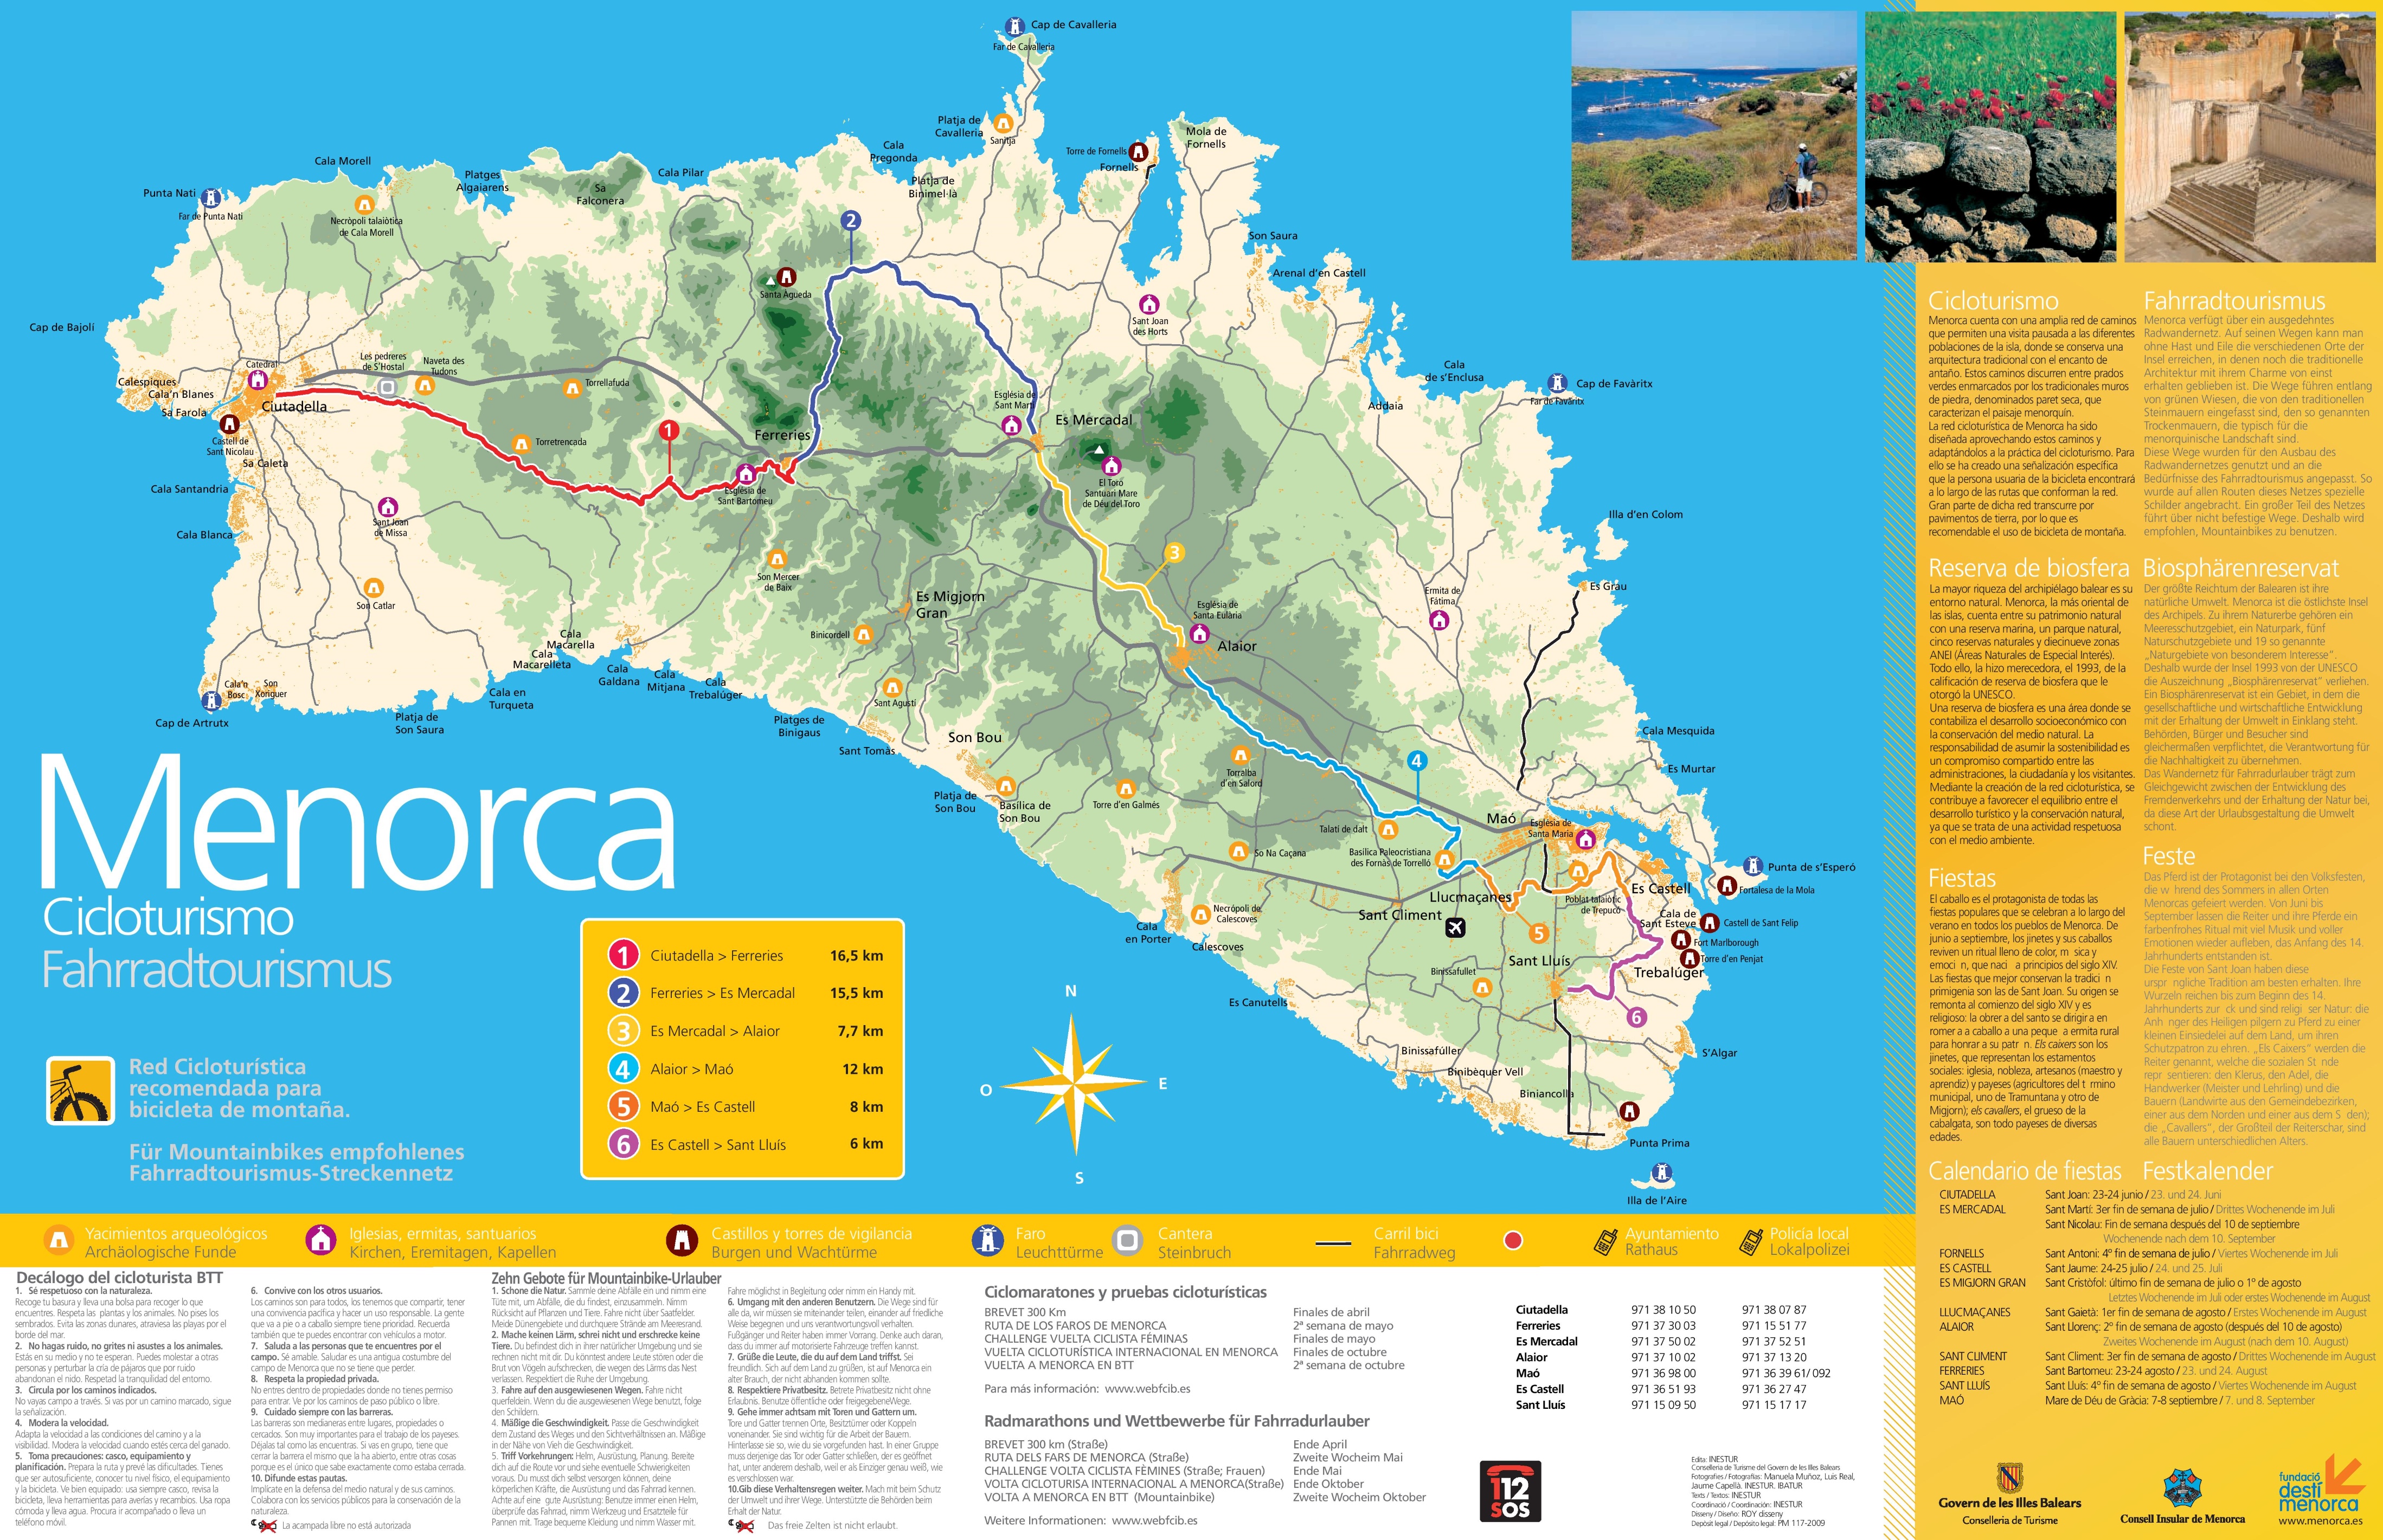 minorca-sightseeing-map.jpg